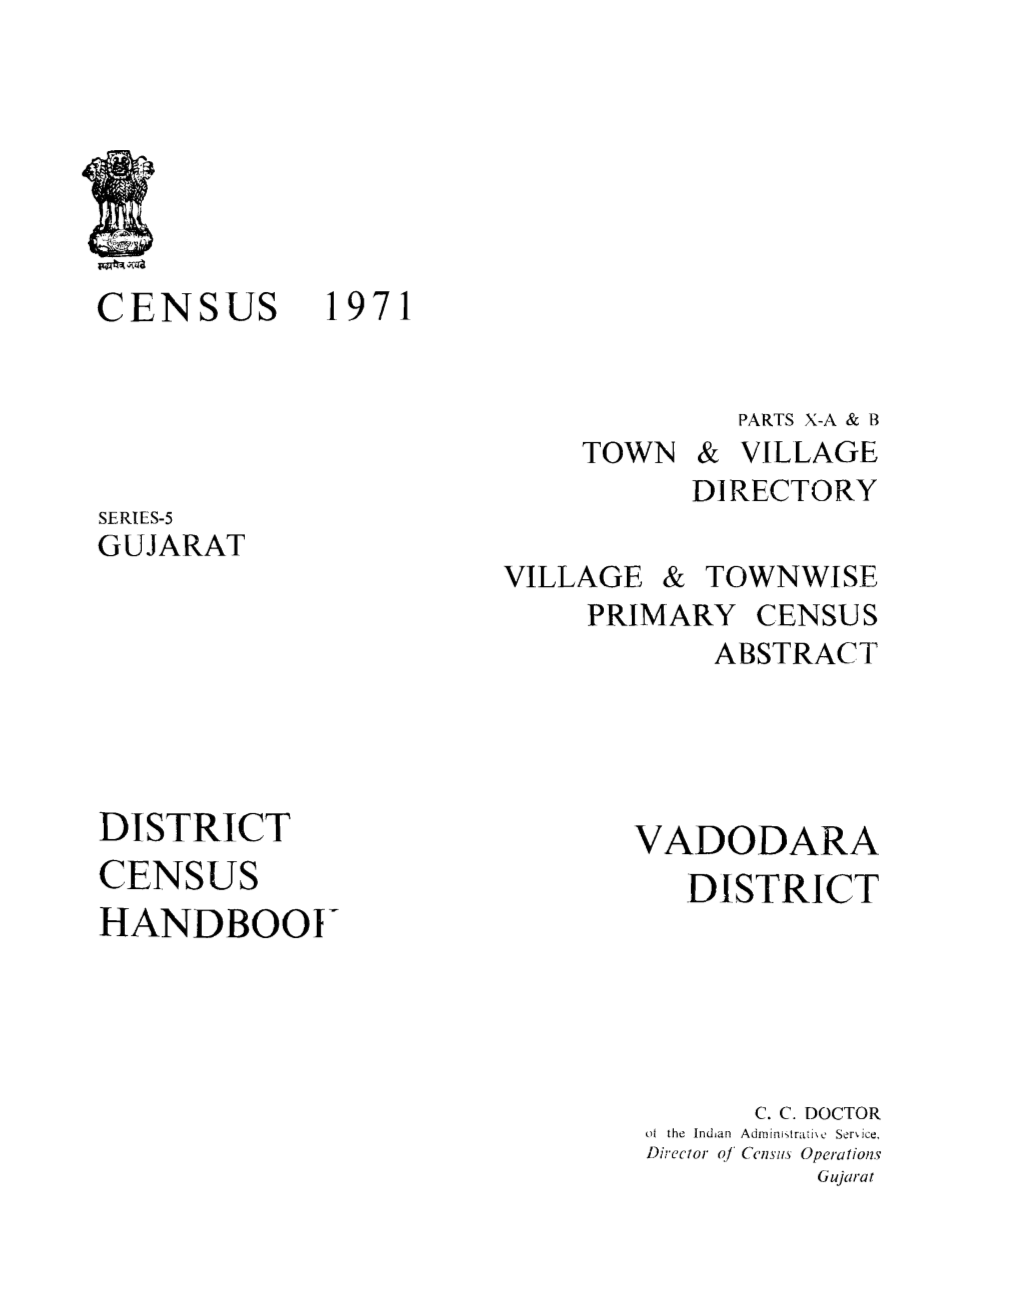 District Census Handbook, Vadodara, Part X-A & B, Series-5